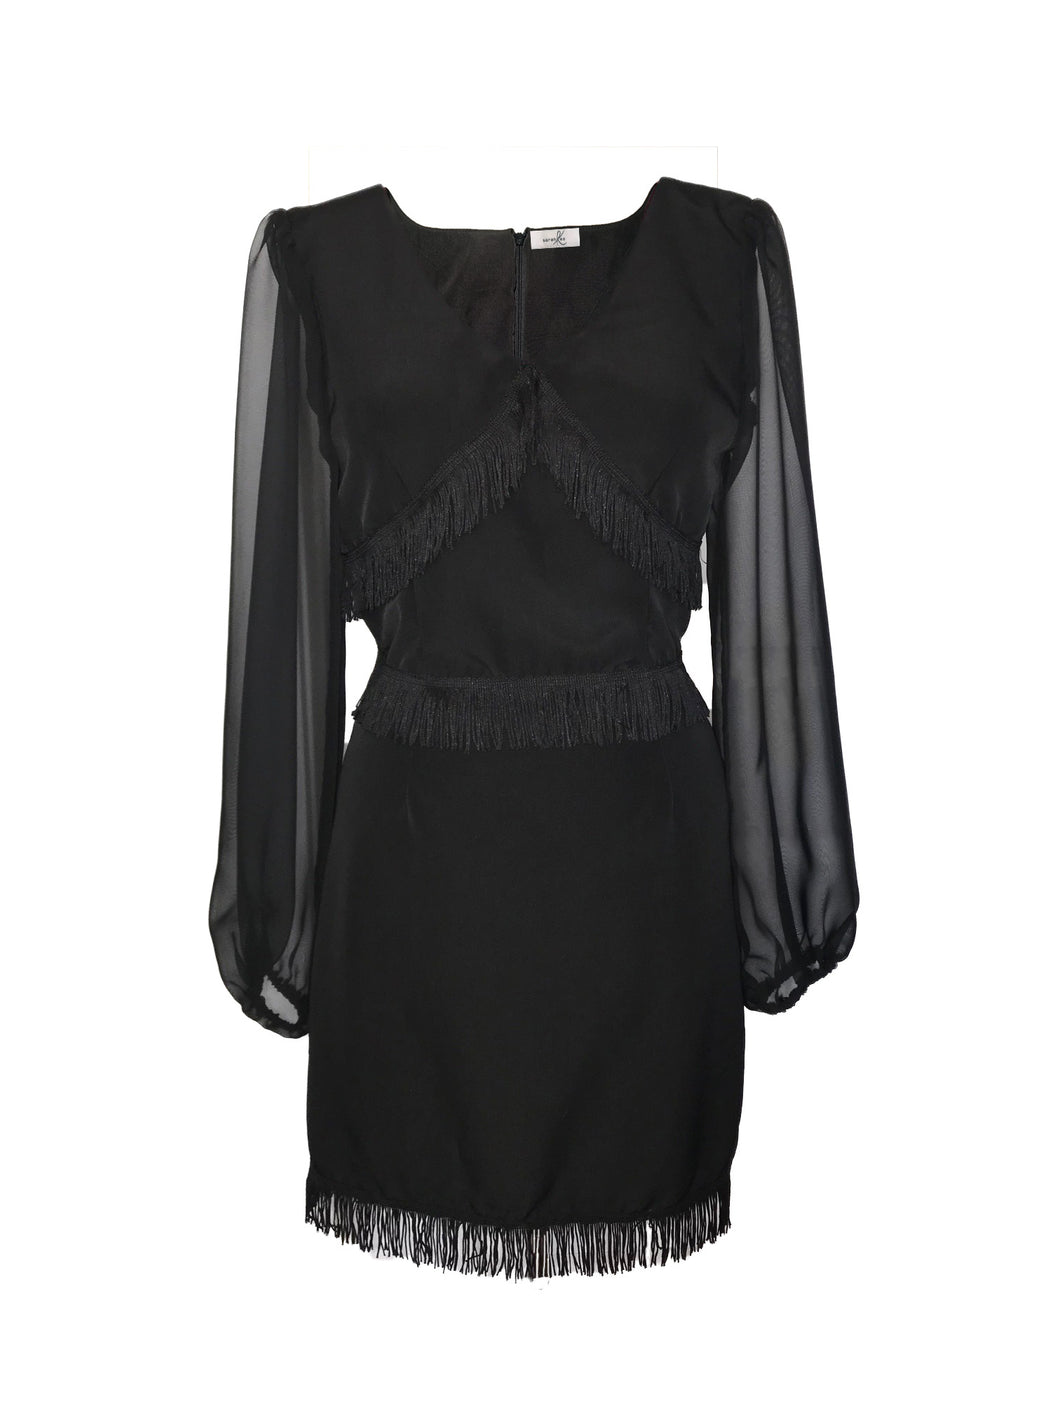 Black fringe long sleeve mini dress